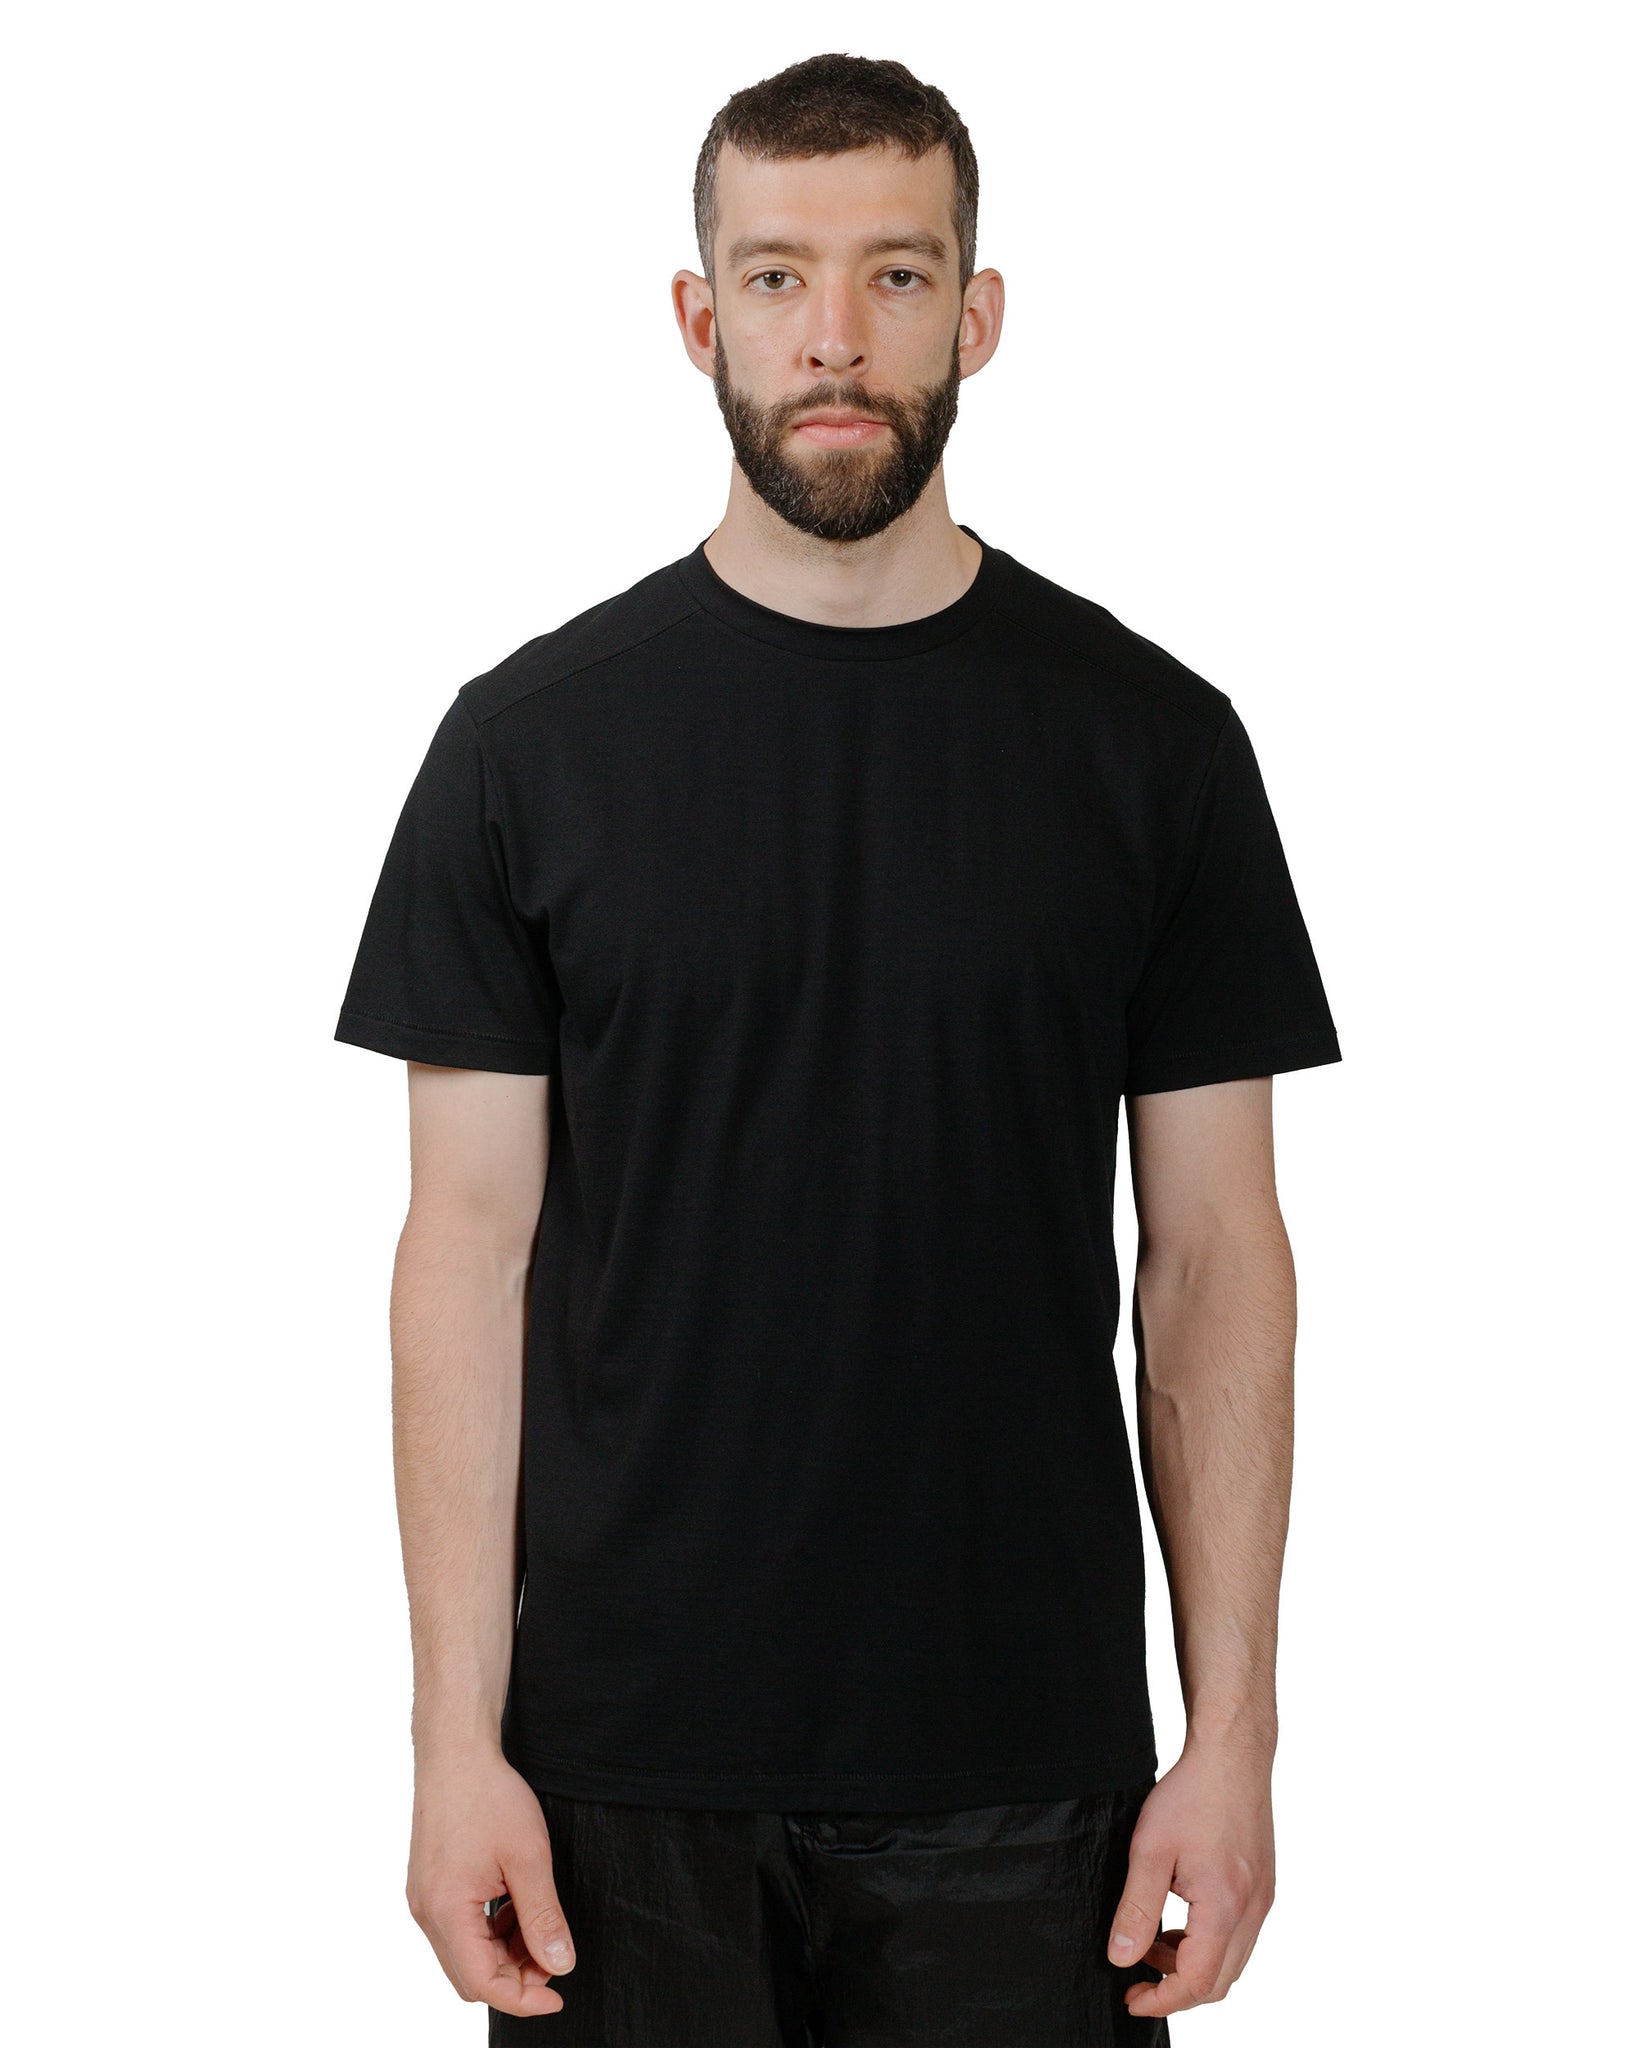 HNDSM A Better T-Shirt Black model front